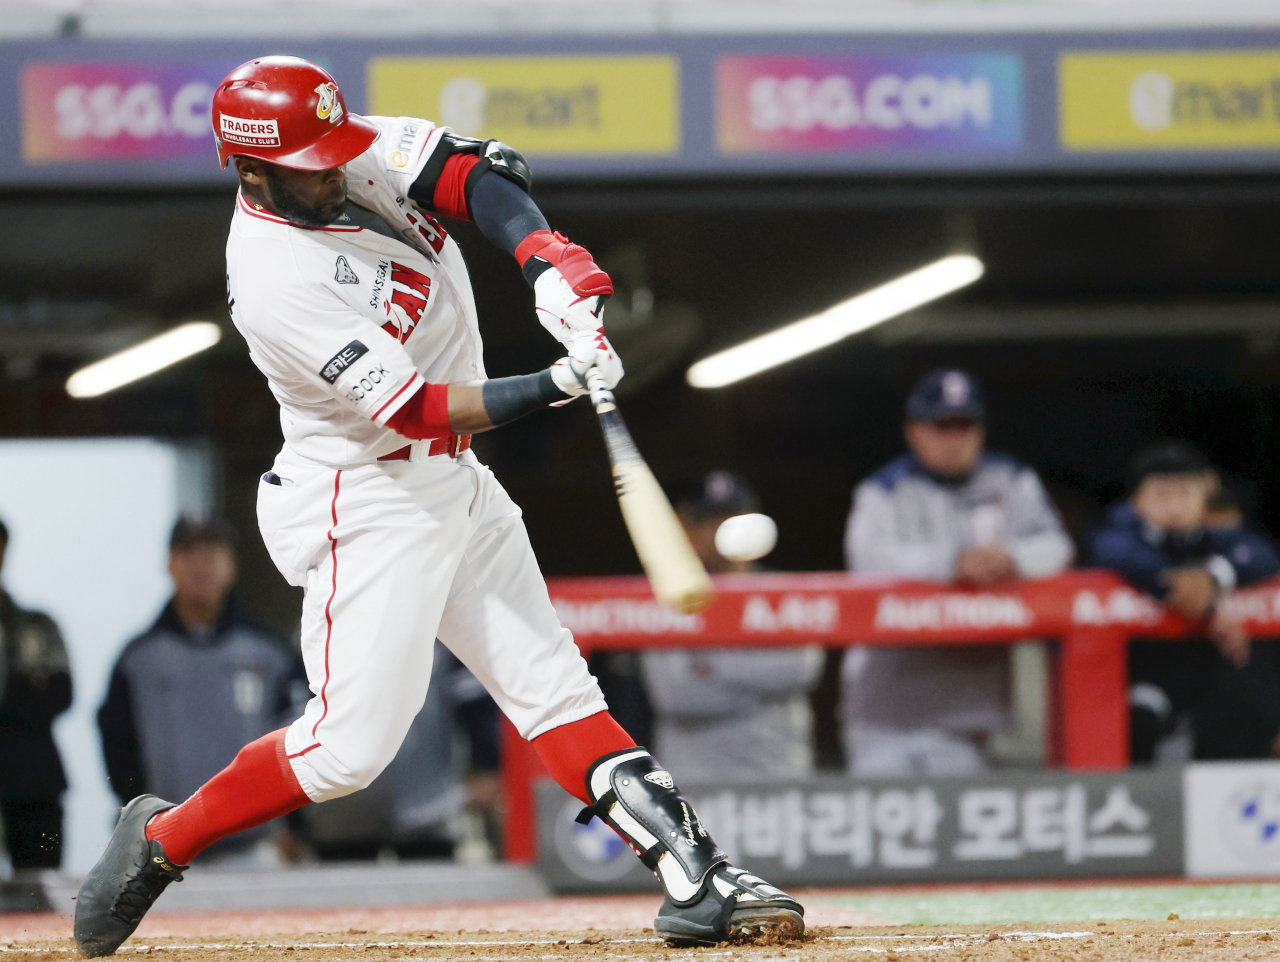 The Joys of Korean Baseball and the Risks of Bringing Back Sports